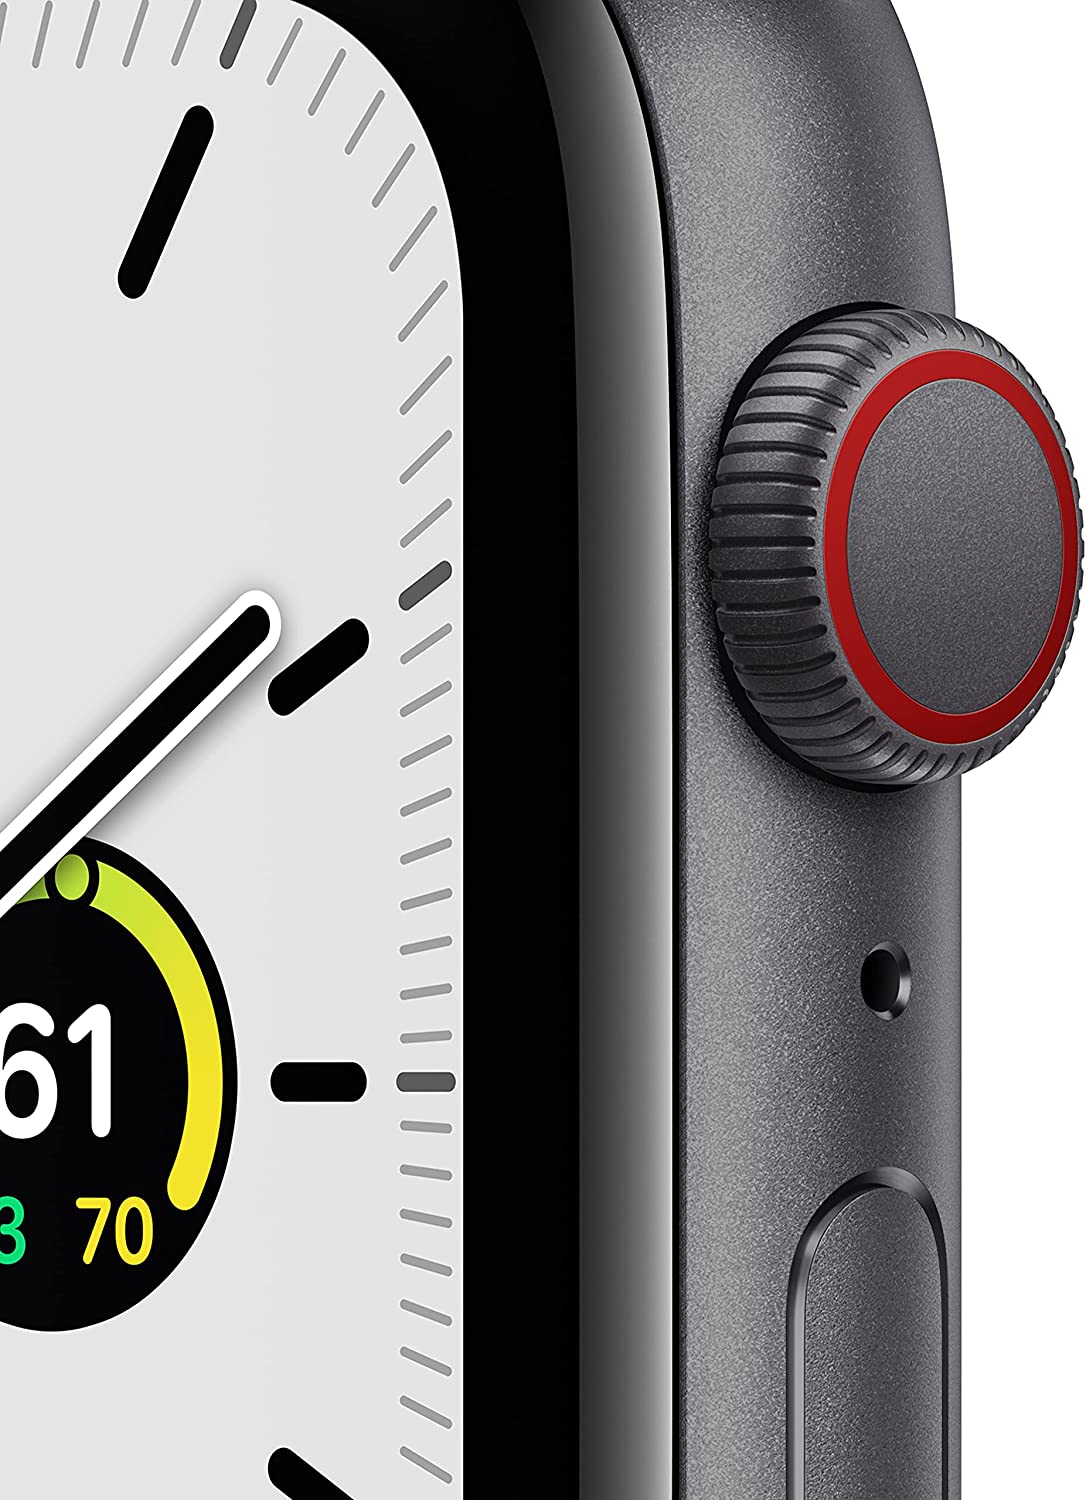 Apple Watch SE 1st Gen Smartwatch w/ Space Grey Aluminium Case (Midnight Sport Band): 40mm GPS $199, 44mm GPS + Cellular $249 + Free Shipping